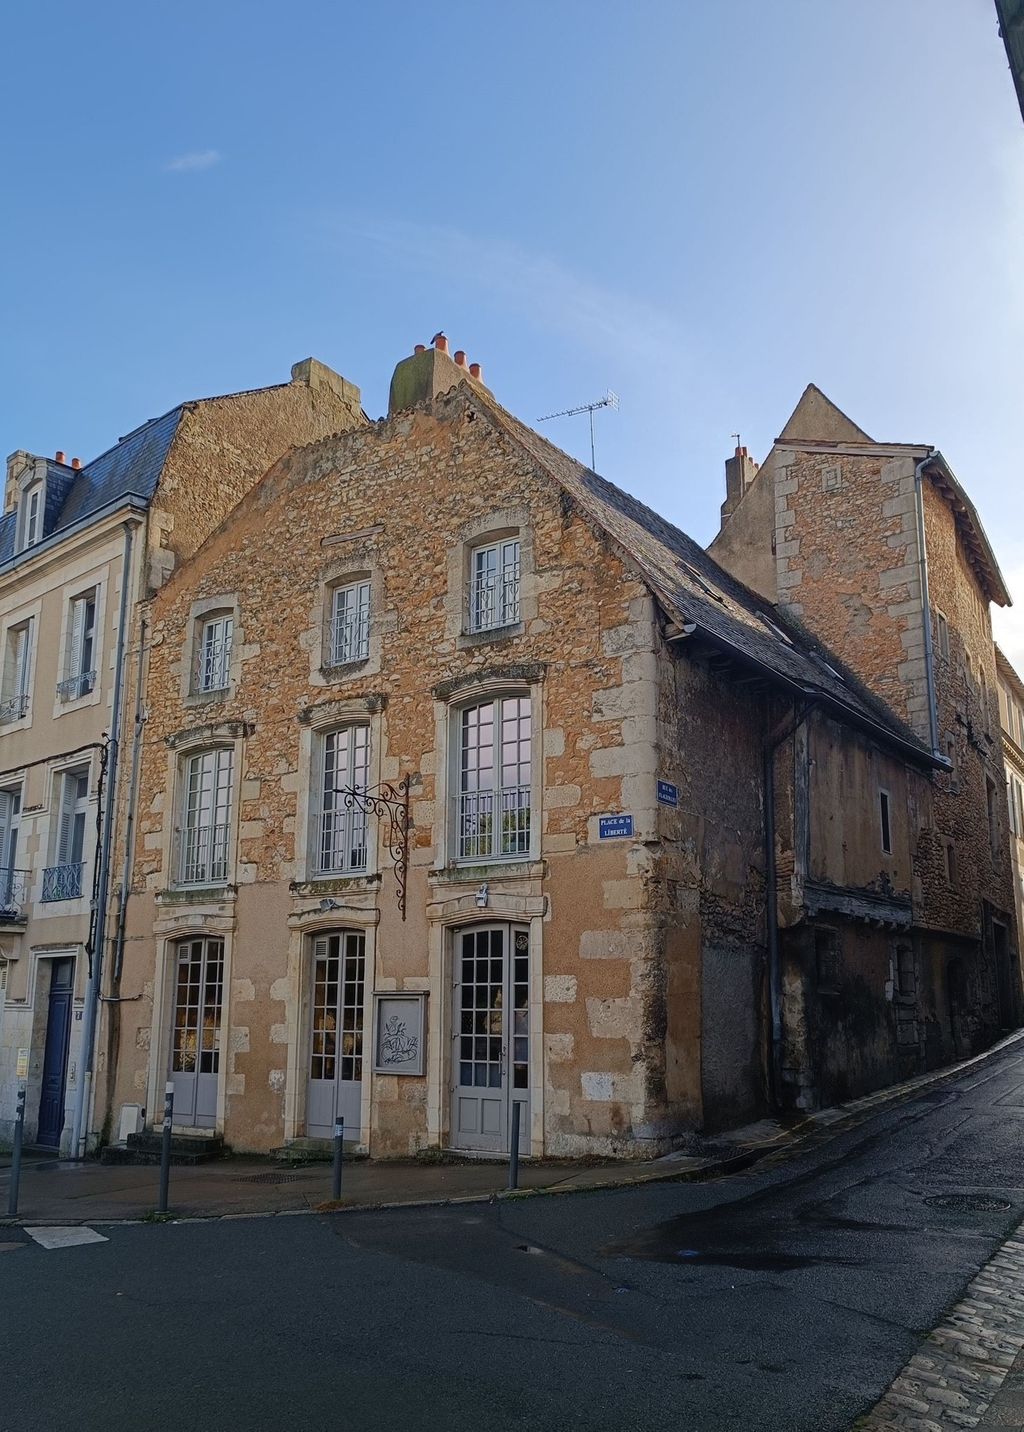 Achat appartement 4 pièce(s) Poitiers